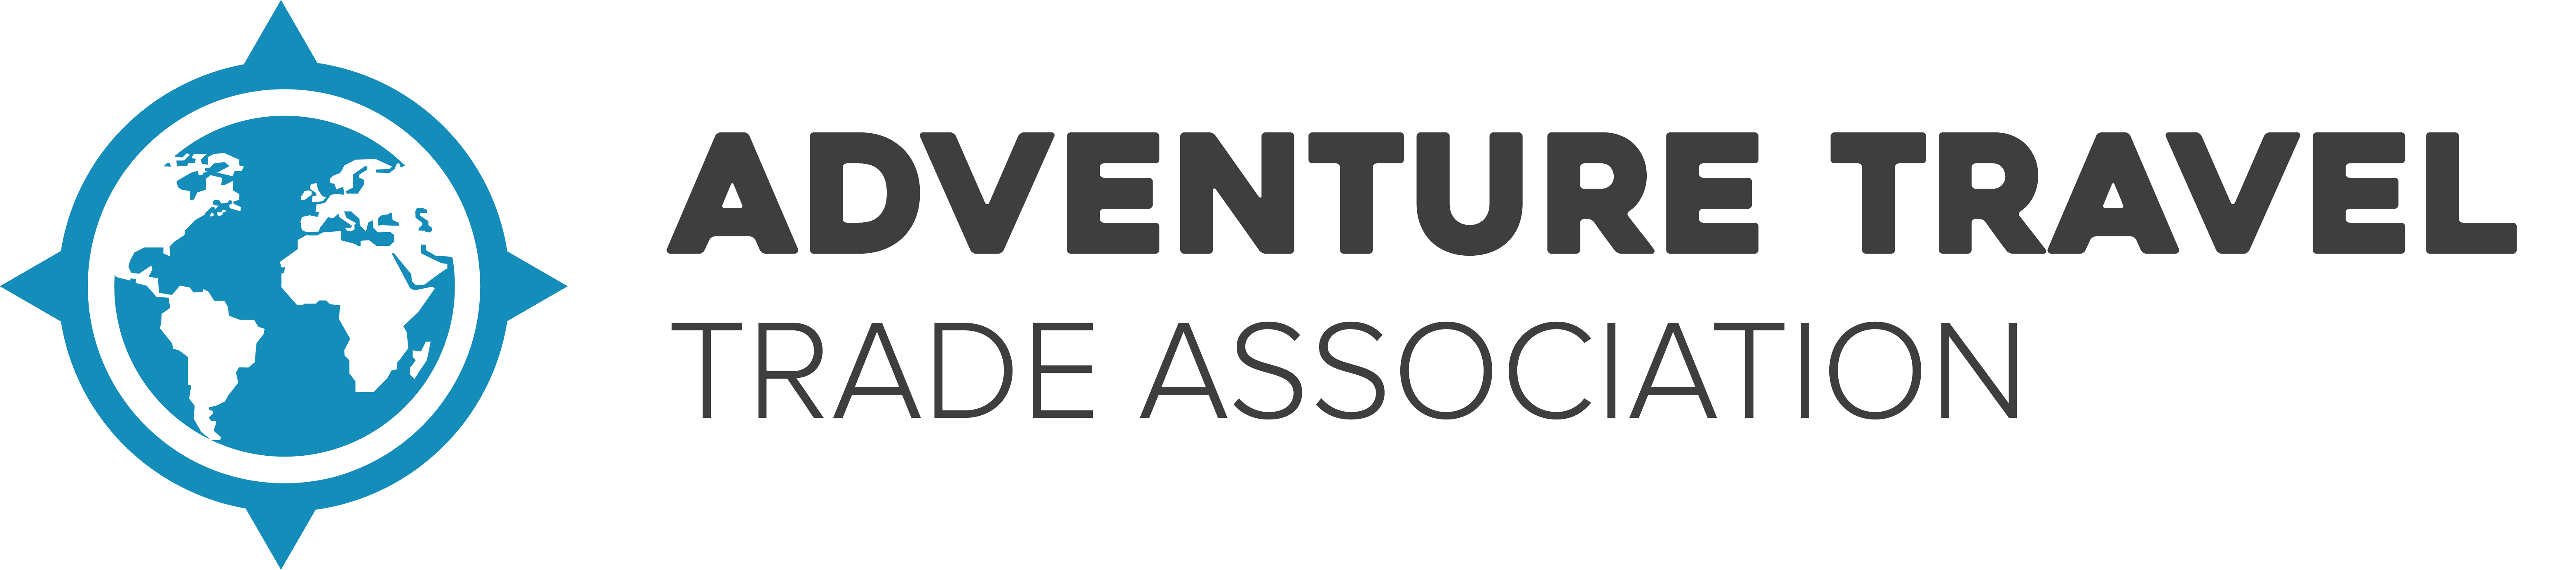 The Adventure Travel Trade Association (ATTA)